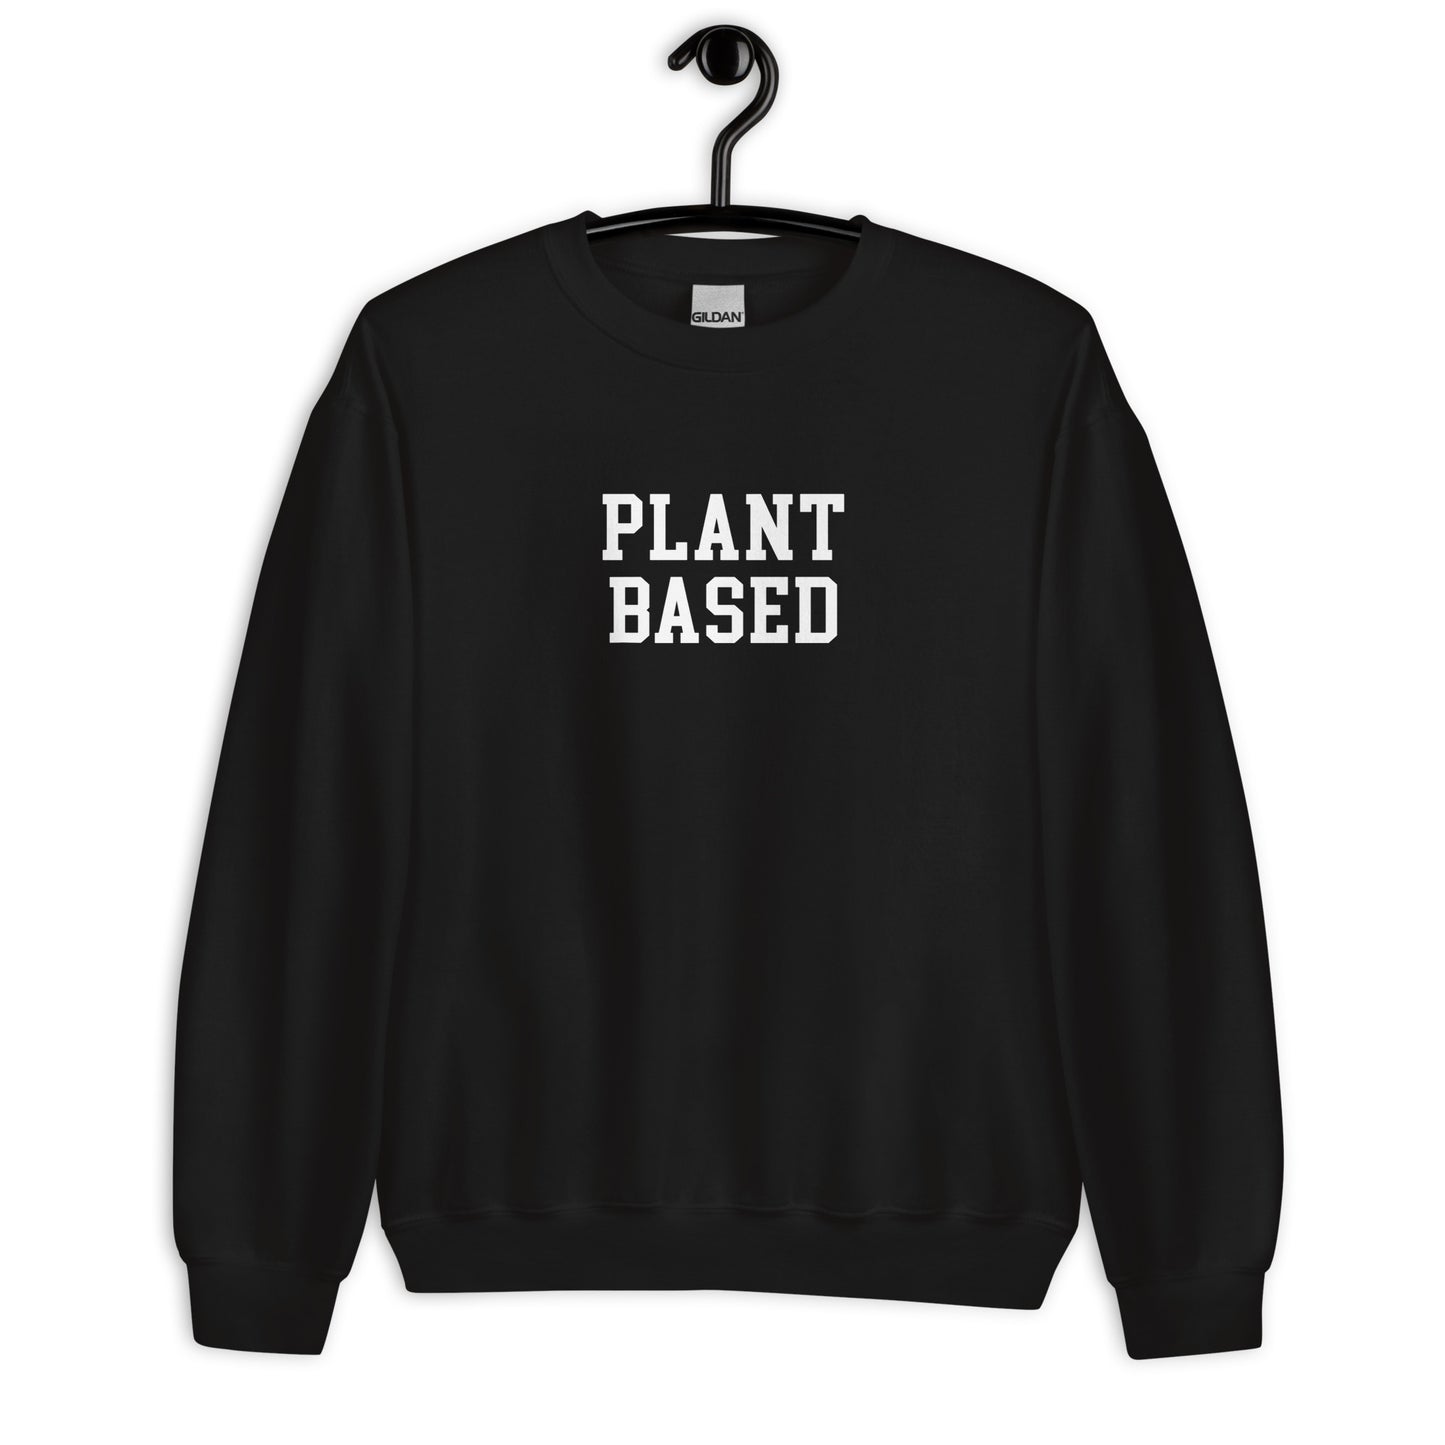 Plant Based Sweatshirt - Arched Font